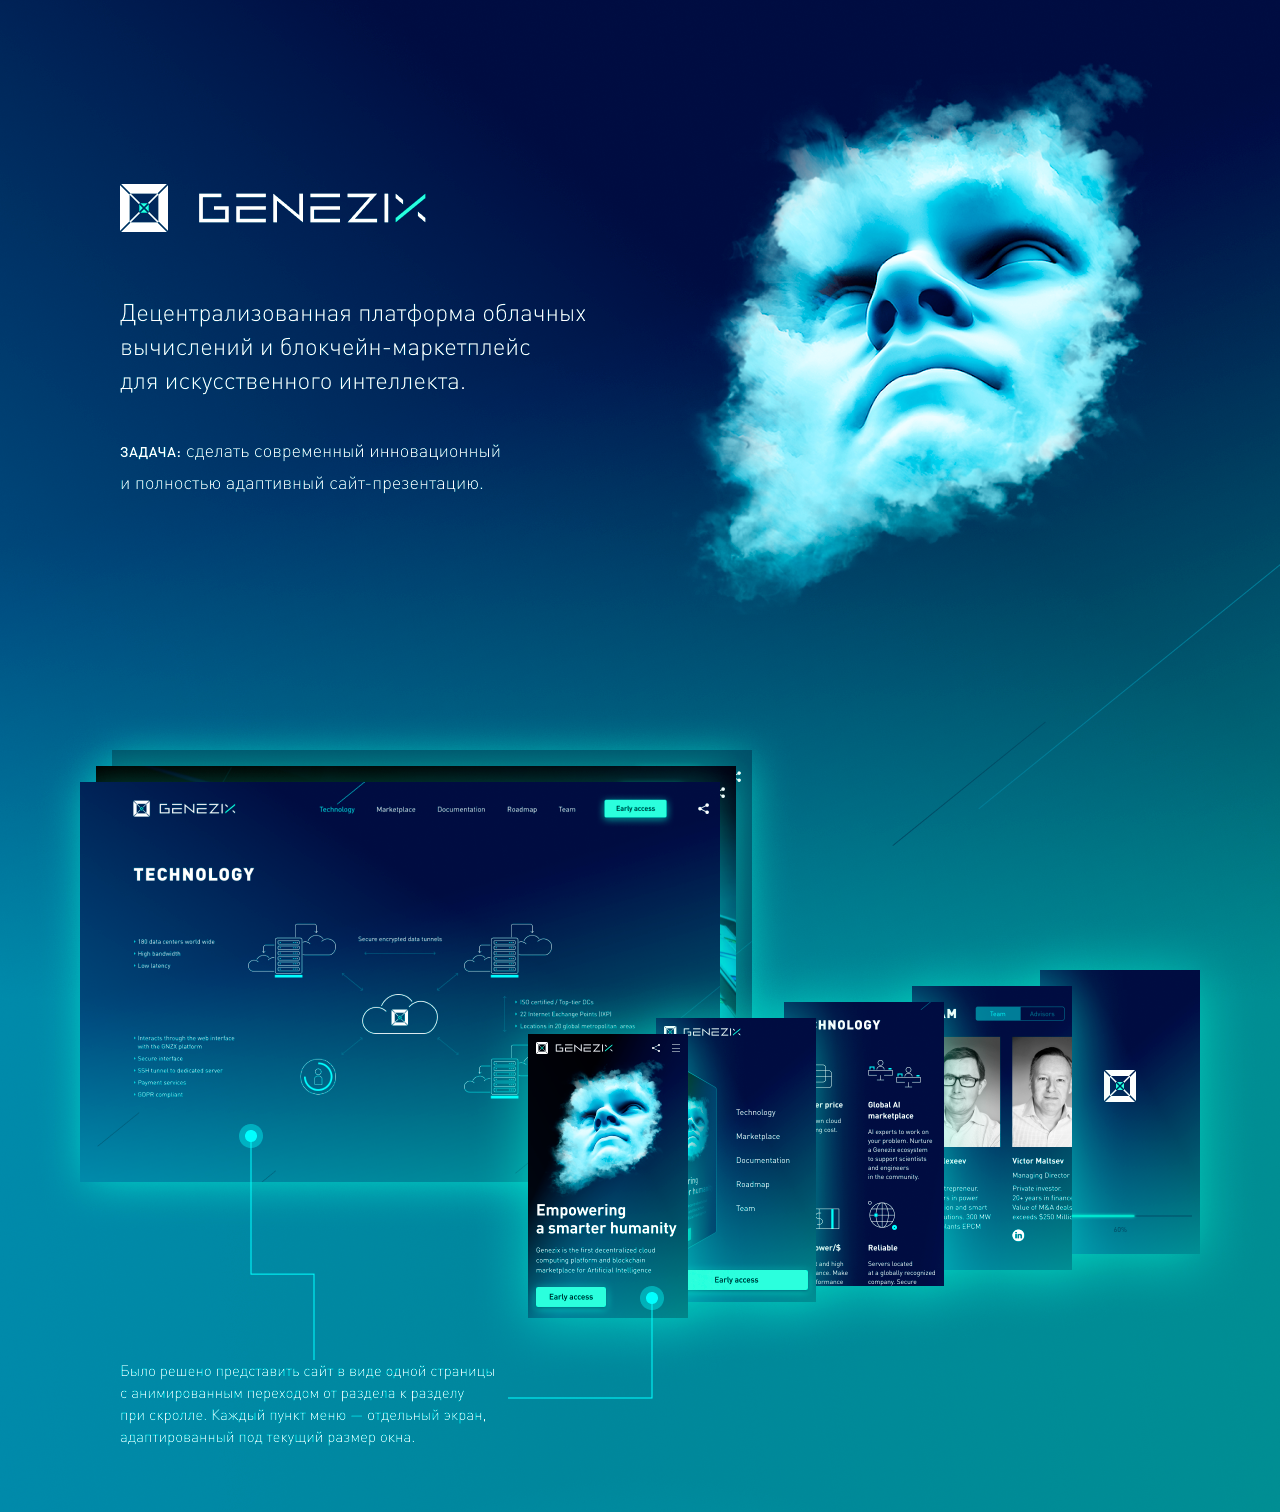 Genezix
Аналитика / Дизайн / Фронтенд-программирование / Бэкенд-программирование
© No Logo Studio